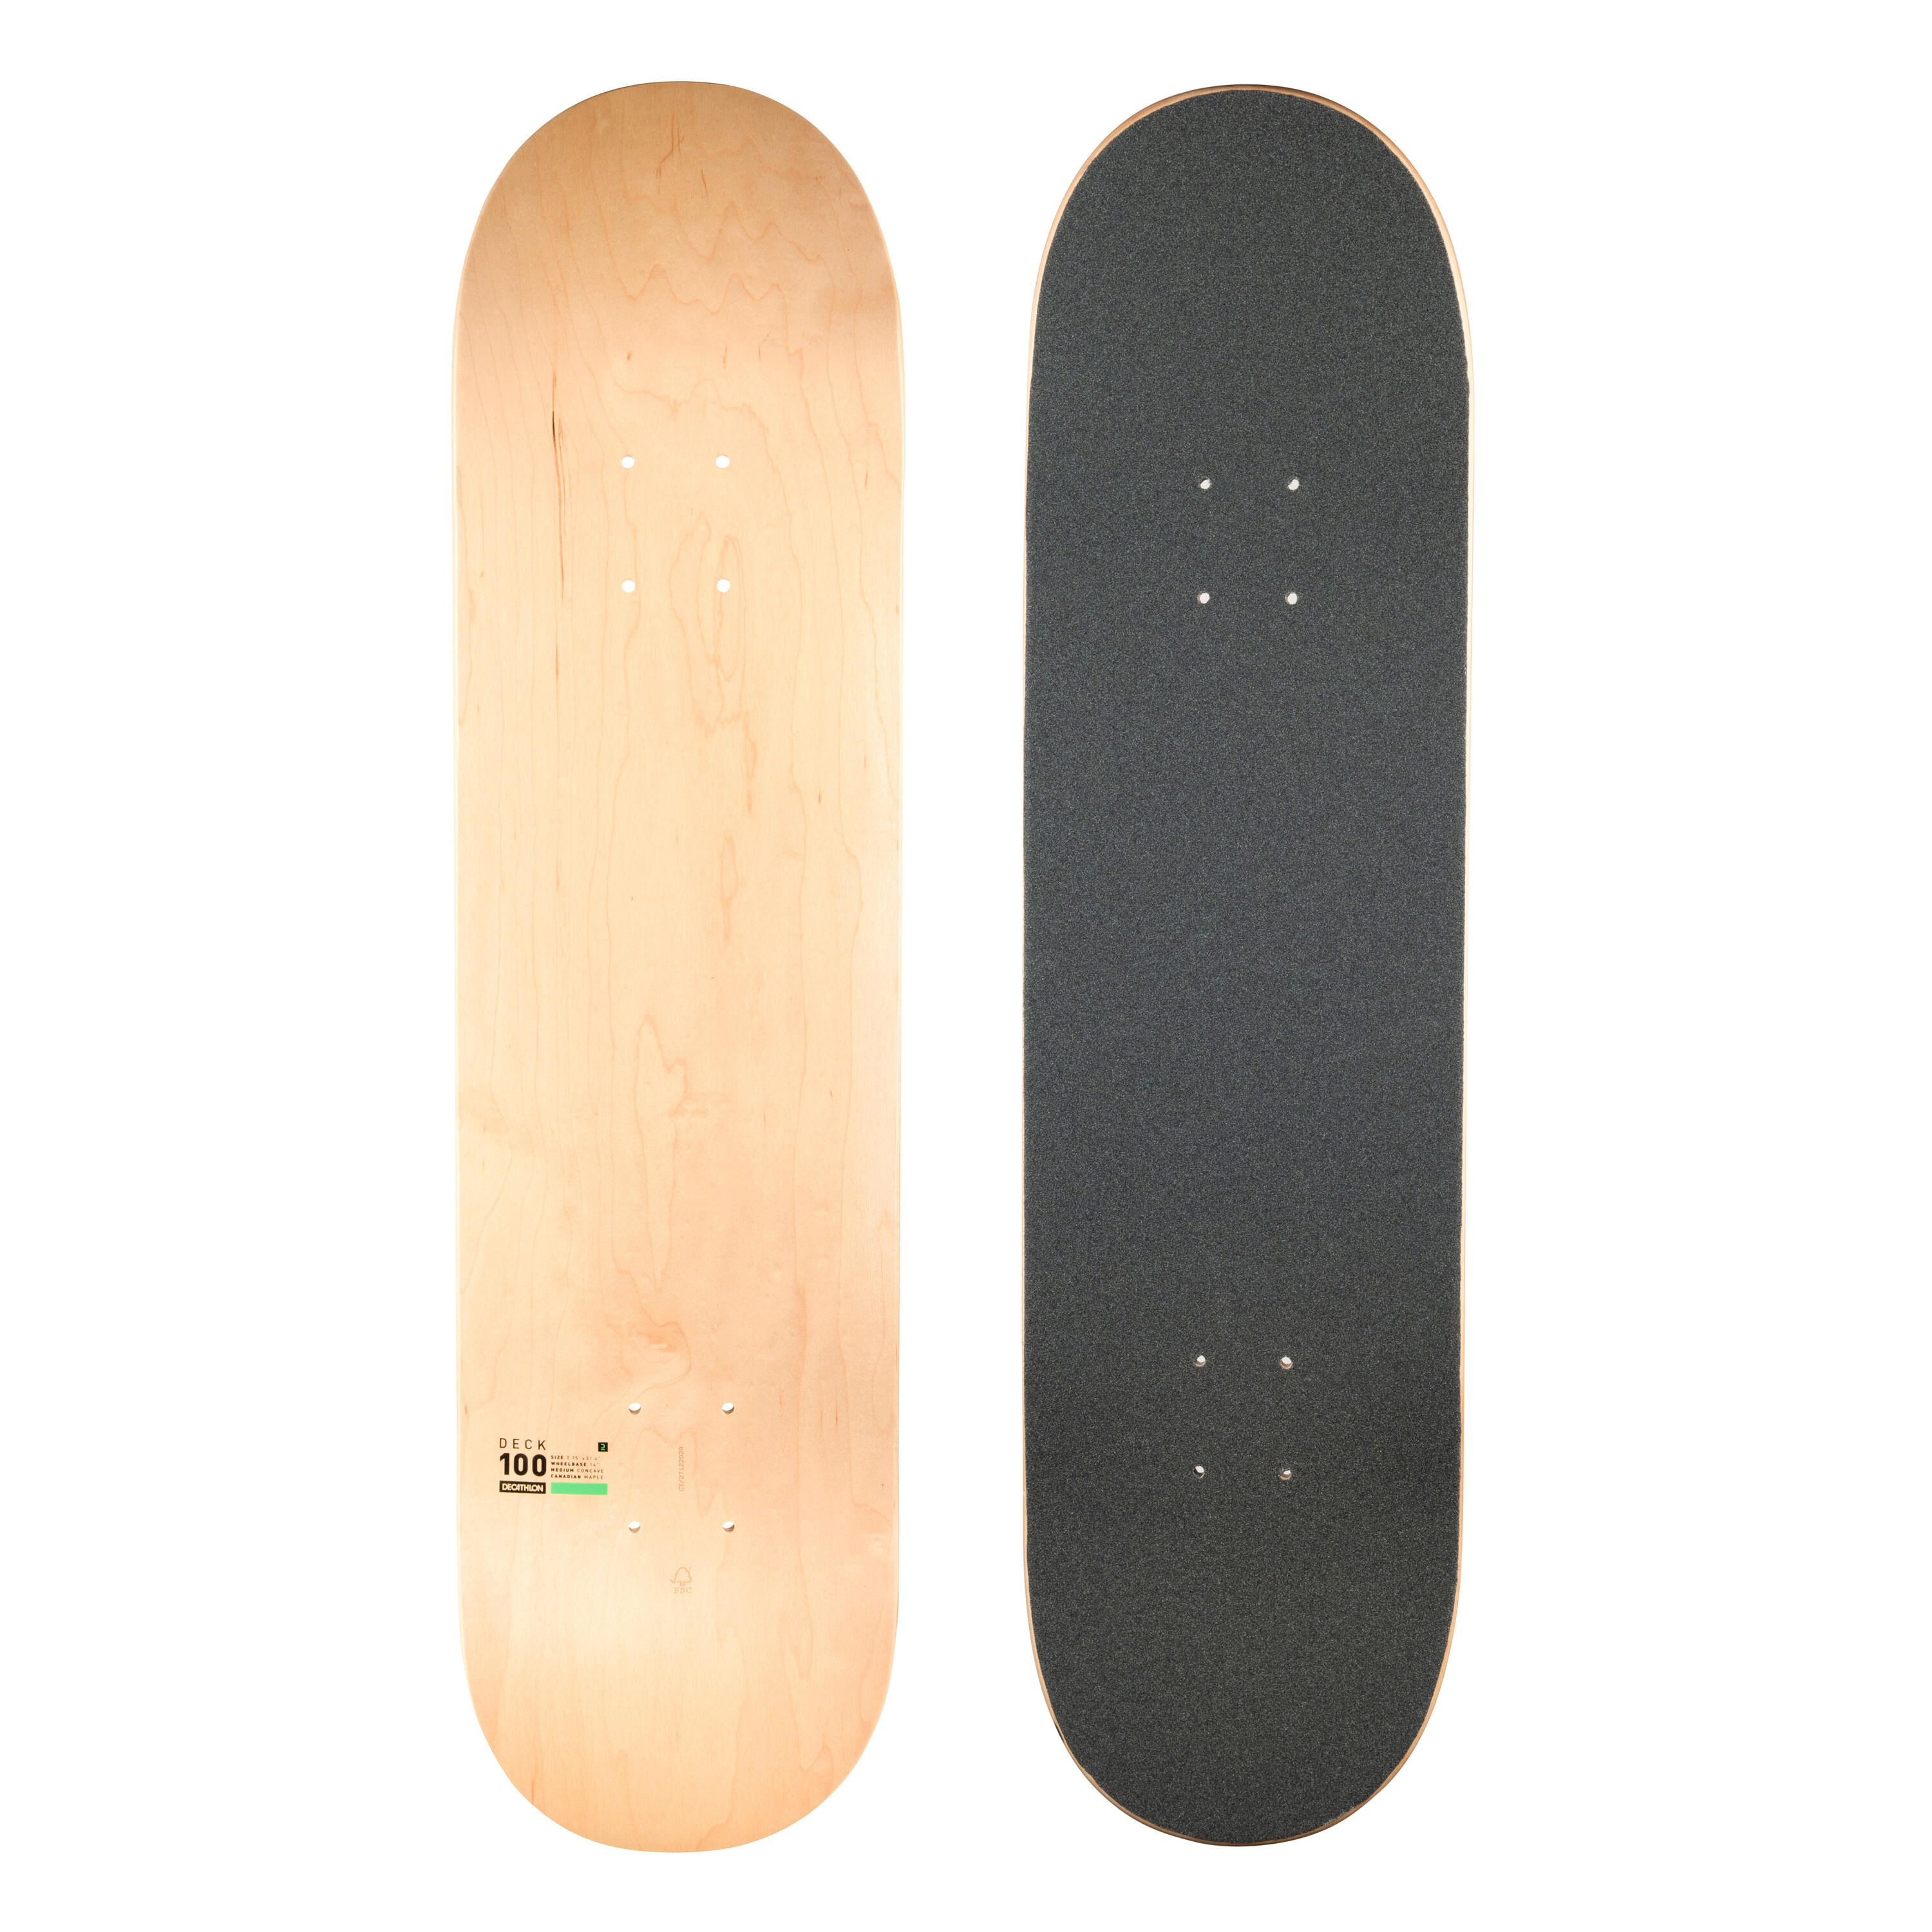 OXELO Maple Skateboard Deck with Grip DK100 7.75"